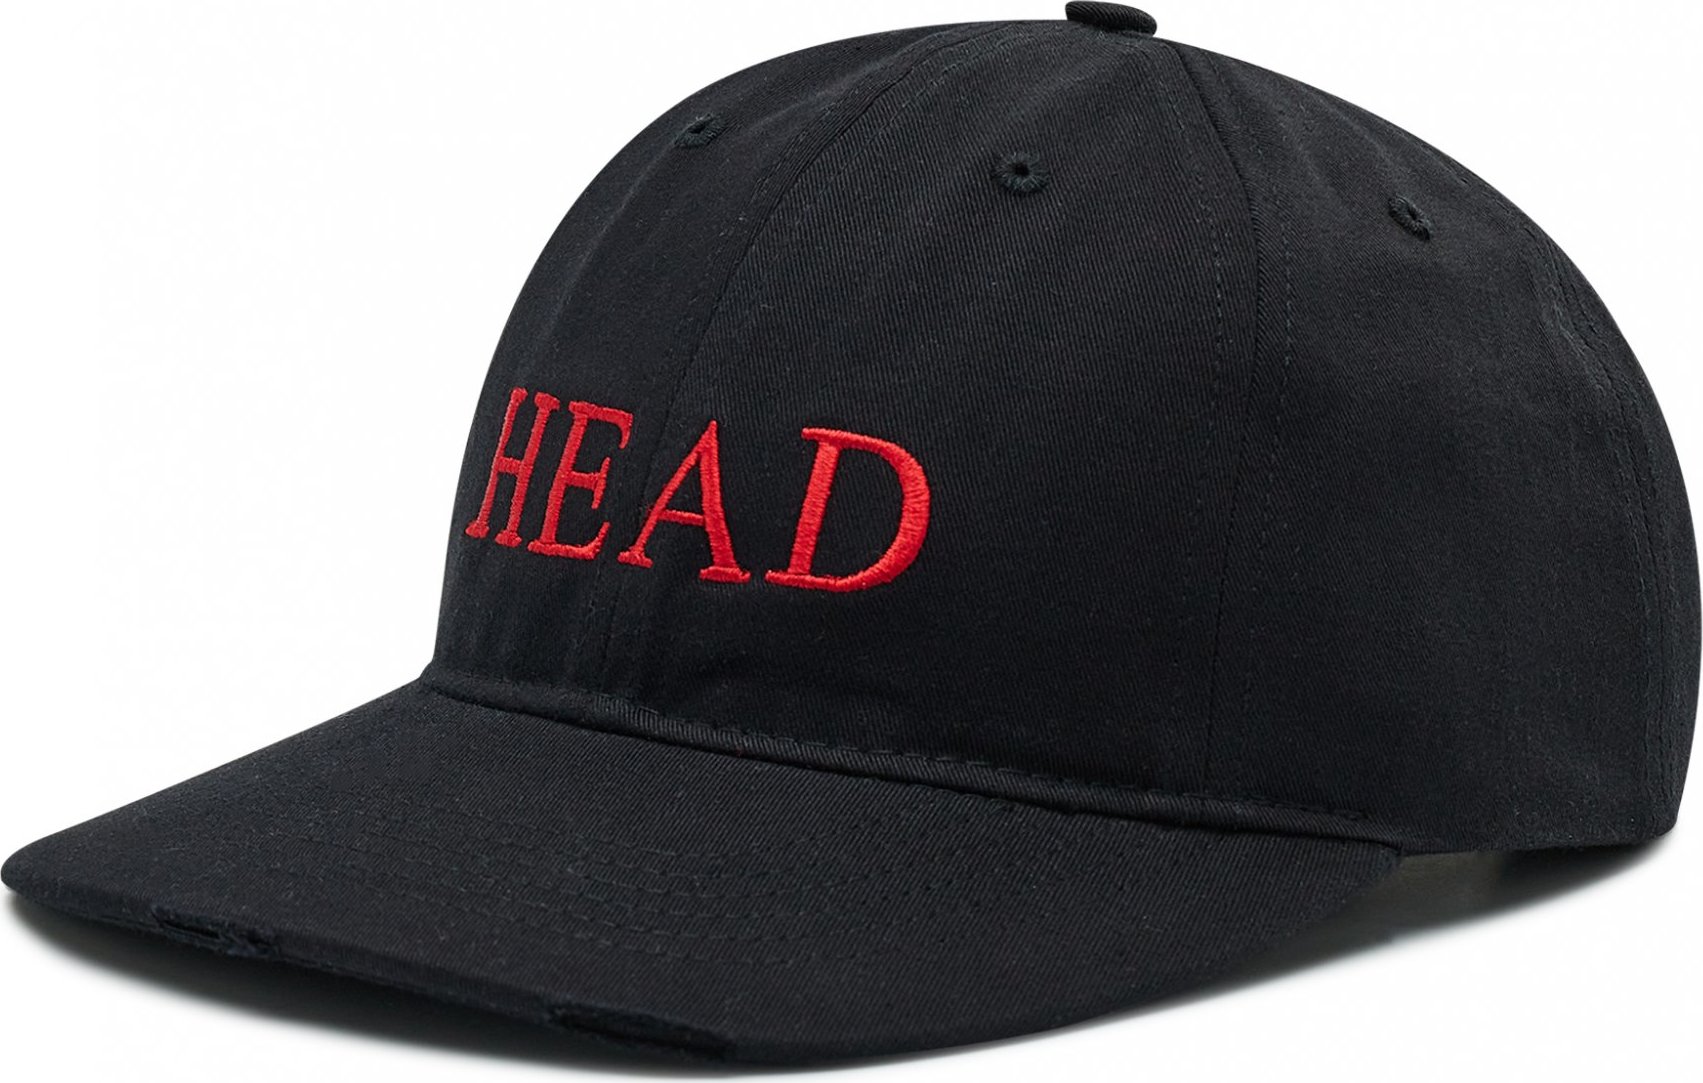 2005 Head Hat